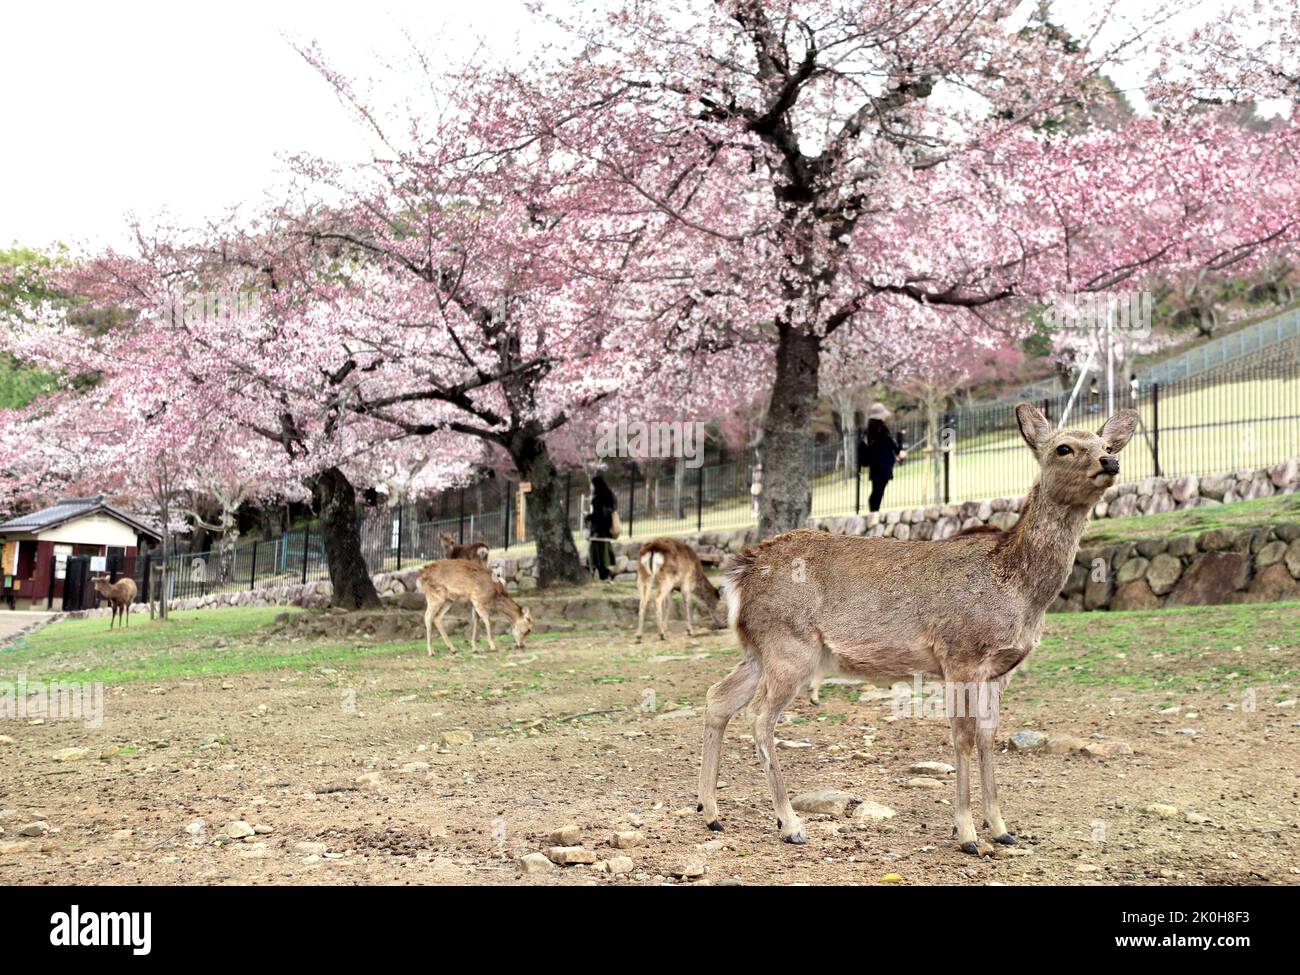 Blooming sakura trees and sika deer (Cervus nippon), Nara, Japan. Famous tourist attraction - wild deer in Nara Park. Sakura blossom season. Cherry bl Stock Photo